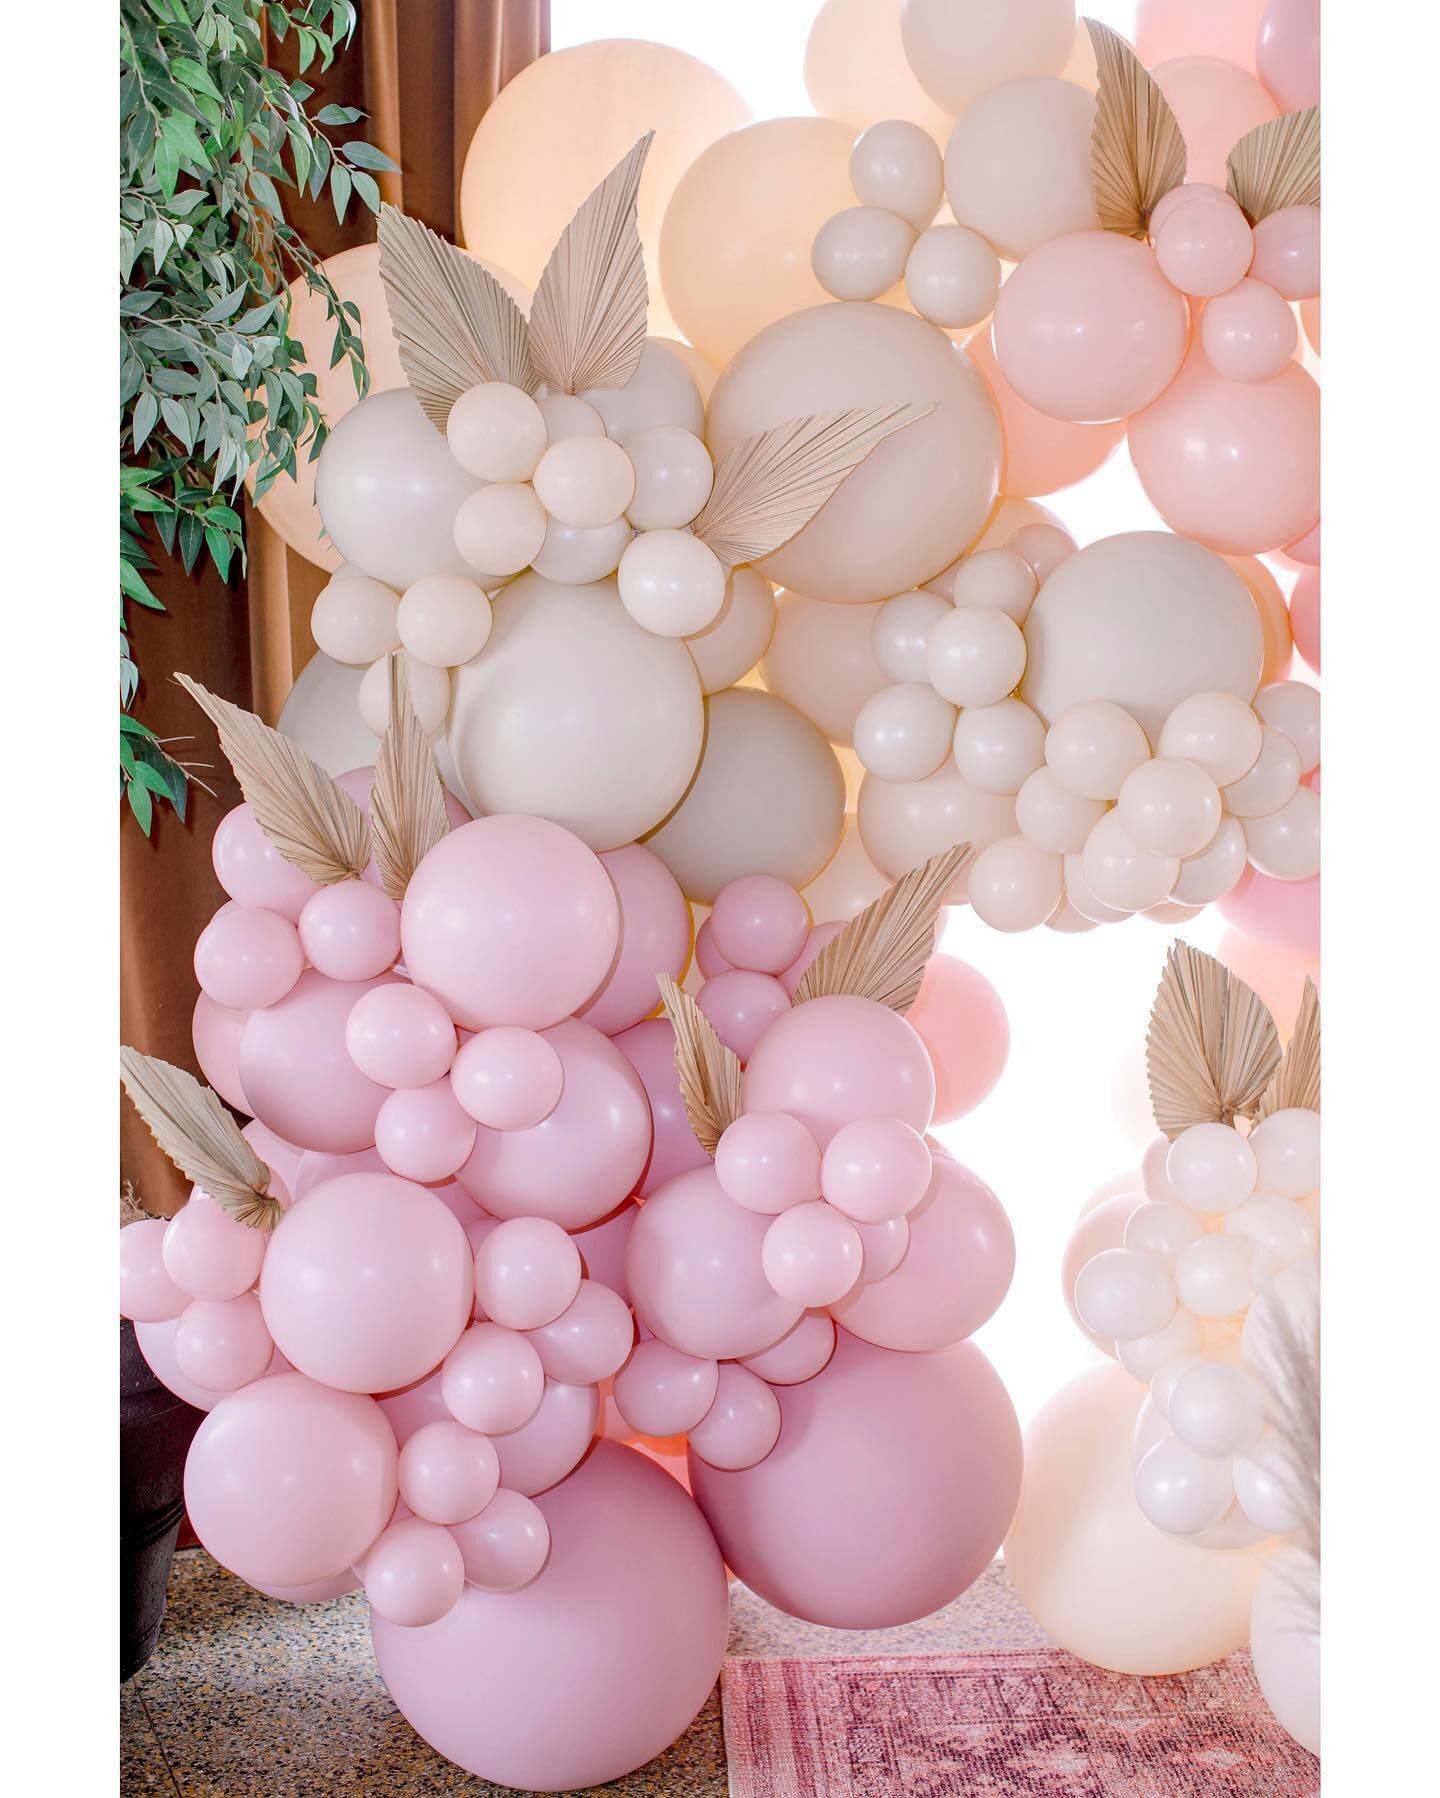 Nothing like a fun #BalloonArch to brighten up a Baby Shower! ✨👶🏻🎀 #babyshower #balloonarch #cristinkellydesign
˙
˙
˙
˙
˙
design, styling + décor: @cristinkellydesign ❘❘ photography: @anchornbee ❘❘ #eventstyling #eventdesign #eventdecor #dessertt